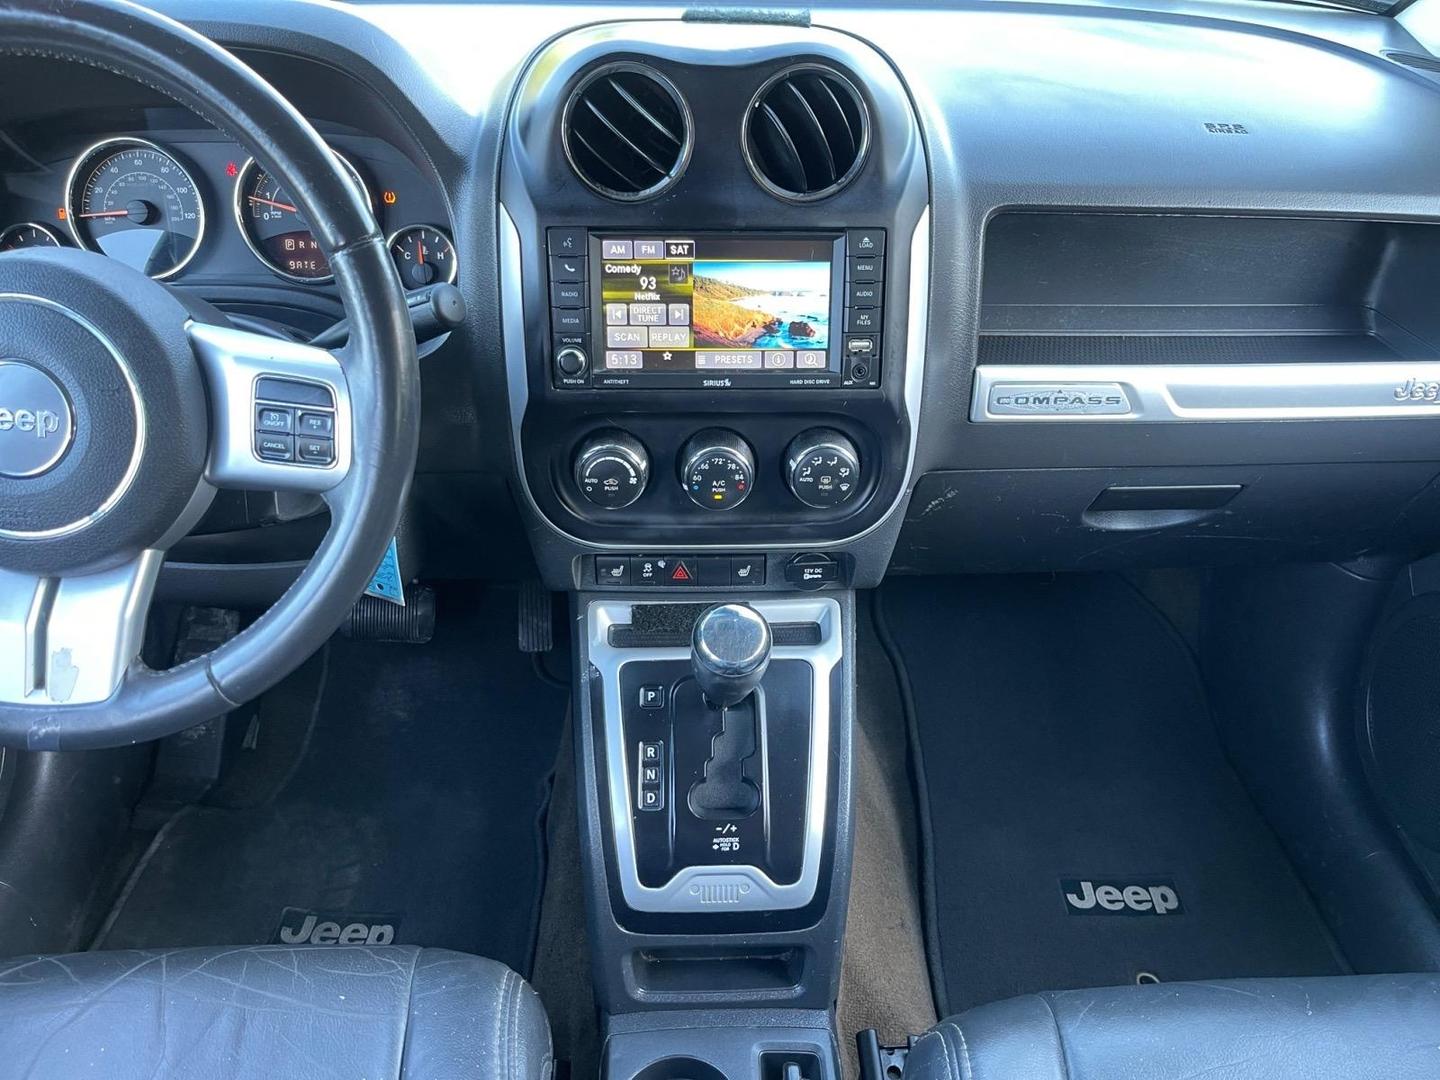 2016 Jeep Compass Utility 4d Latitude 4wd 2.4l I4 - Image 14